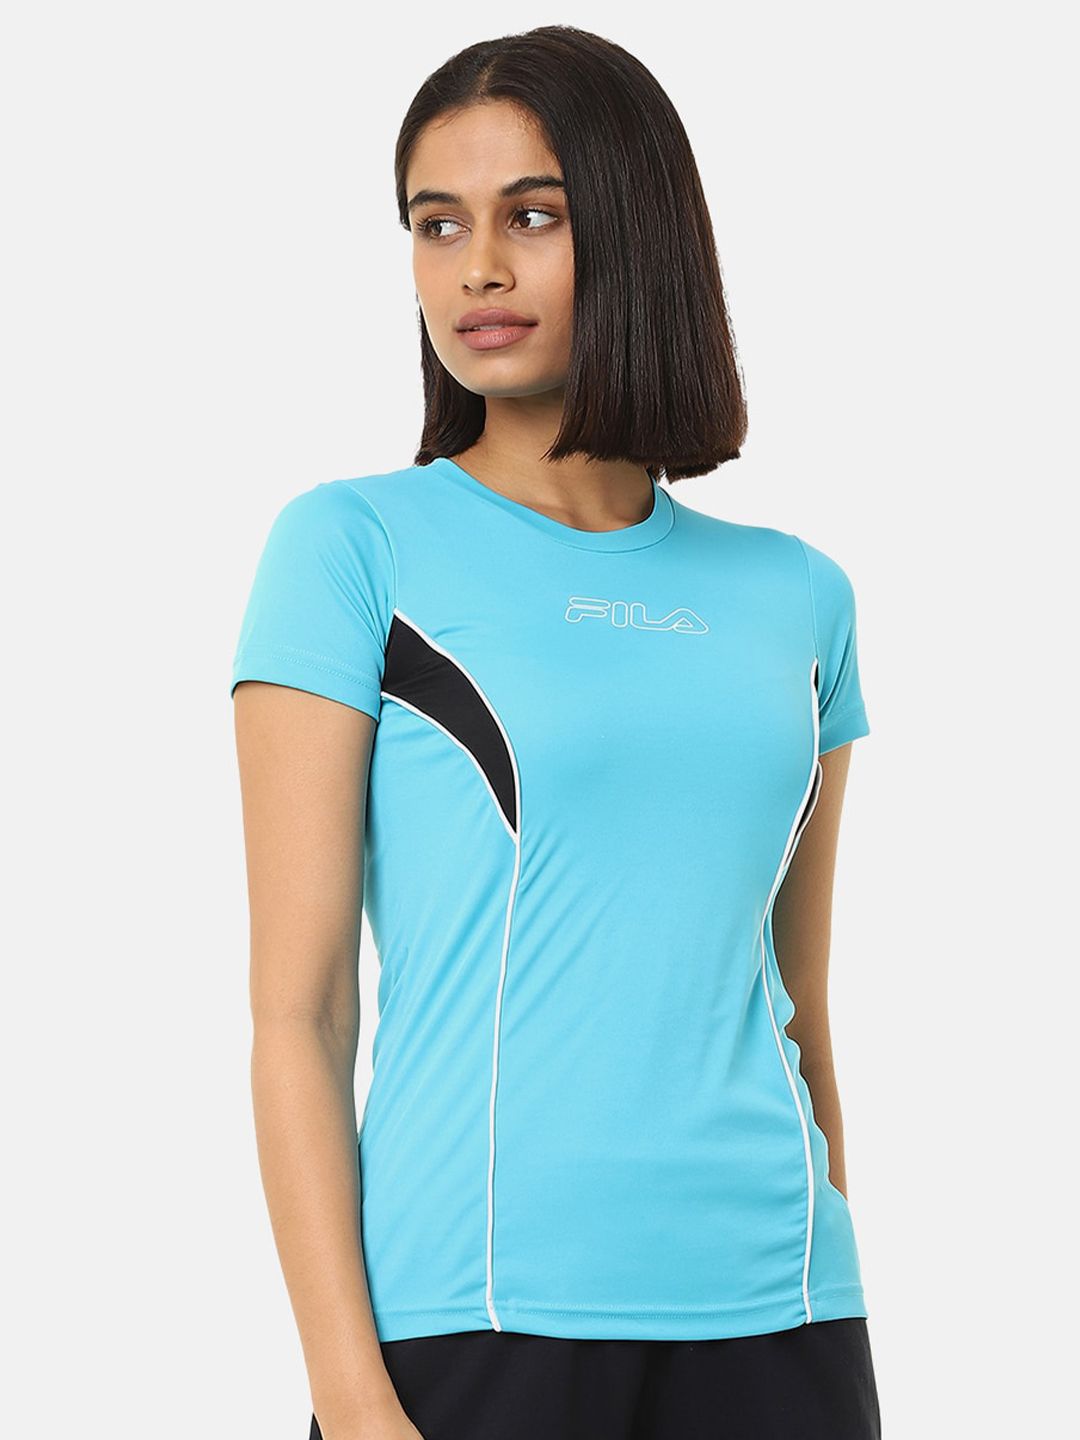 FILA Women Blue & White Brand Logo Printed Outdoor T-shirt Price in India